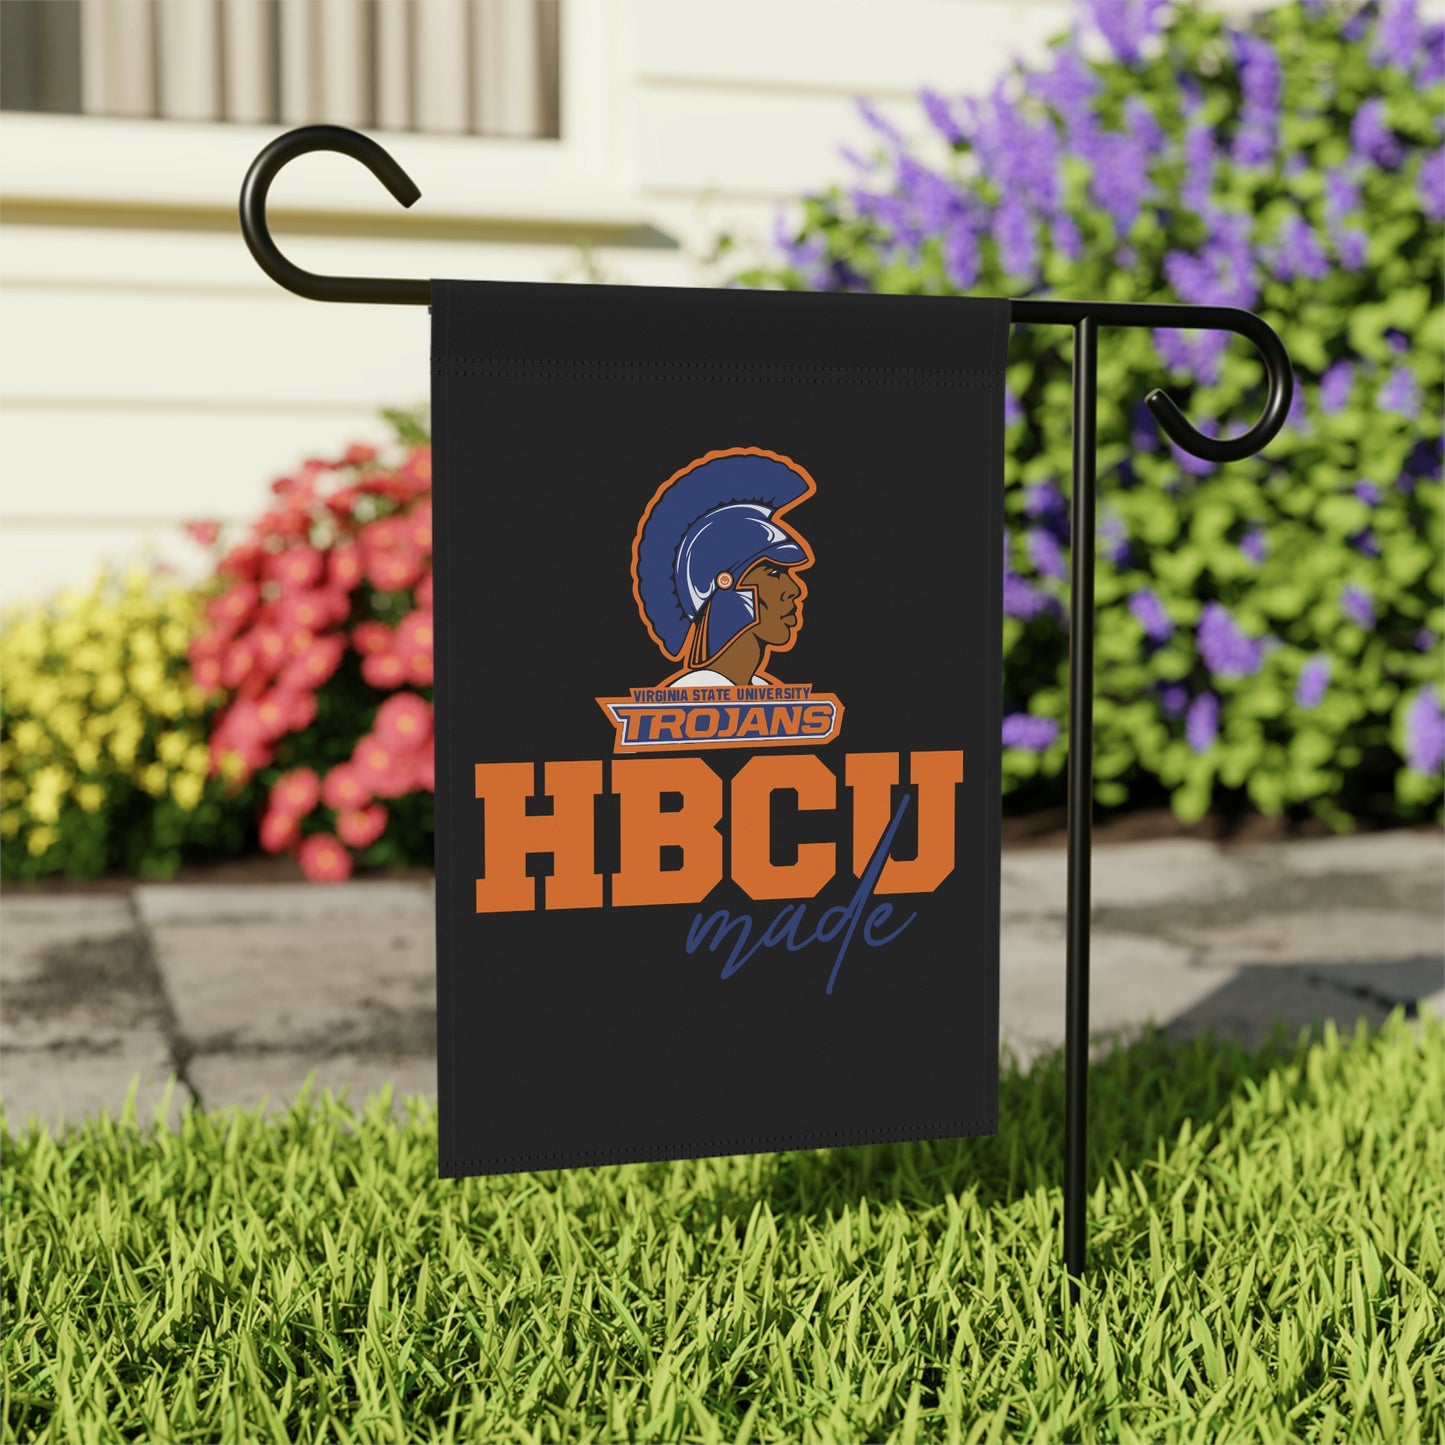 HBCU Made Virginia State University VSU Garden & House Banner